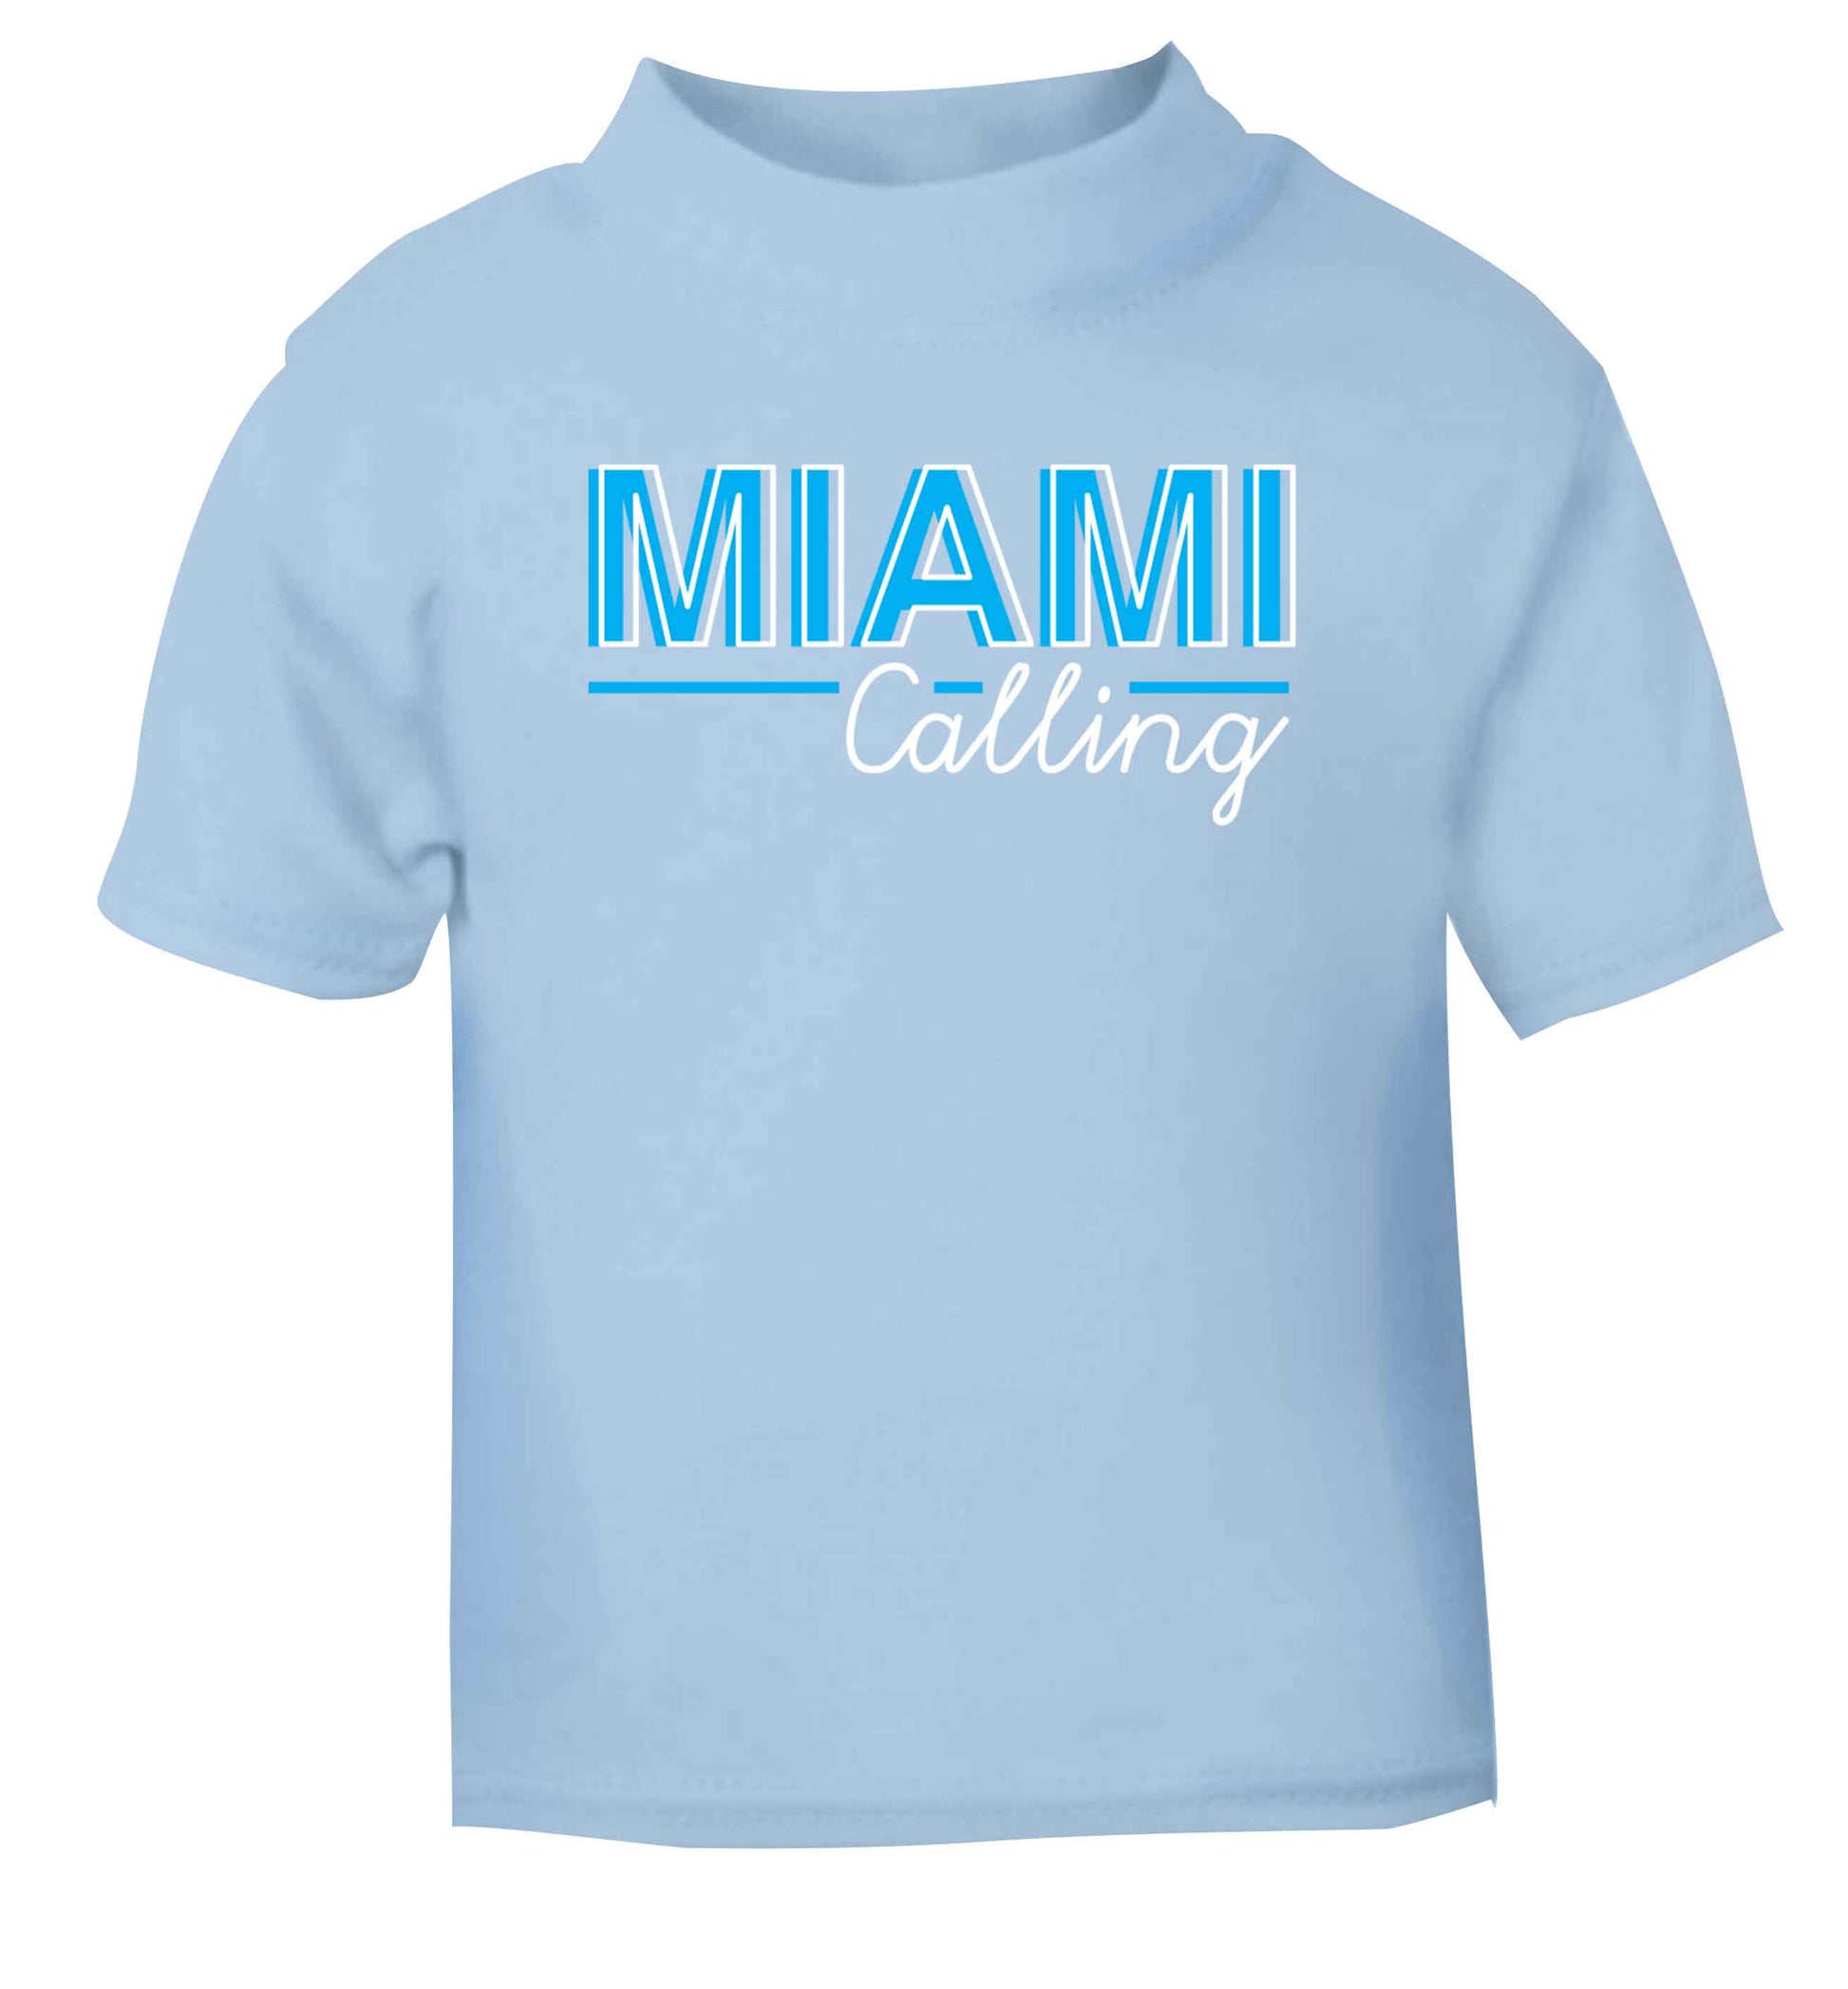 Miami calling light blue Baby Toddler Tshirt 2 Years